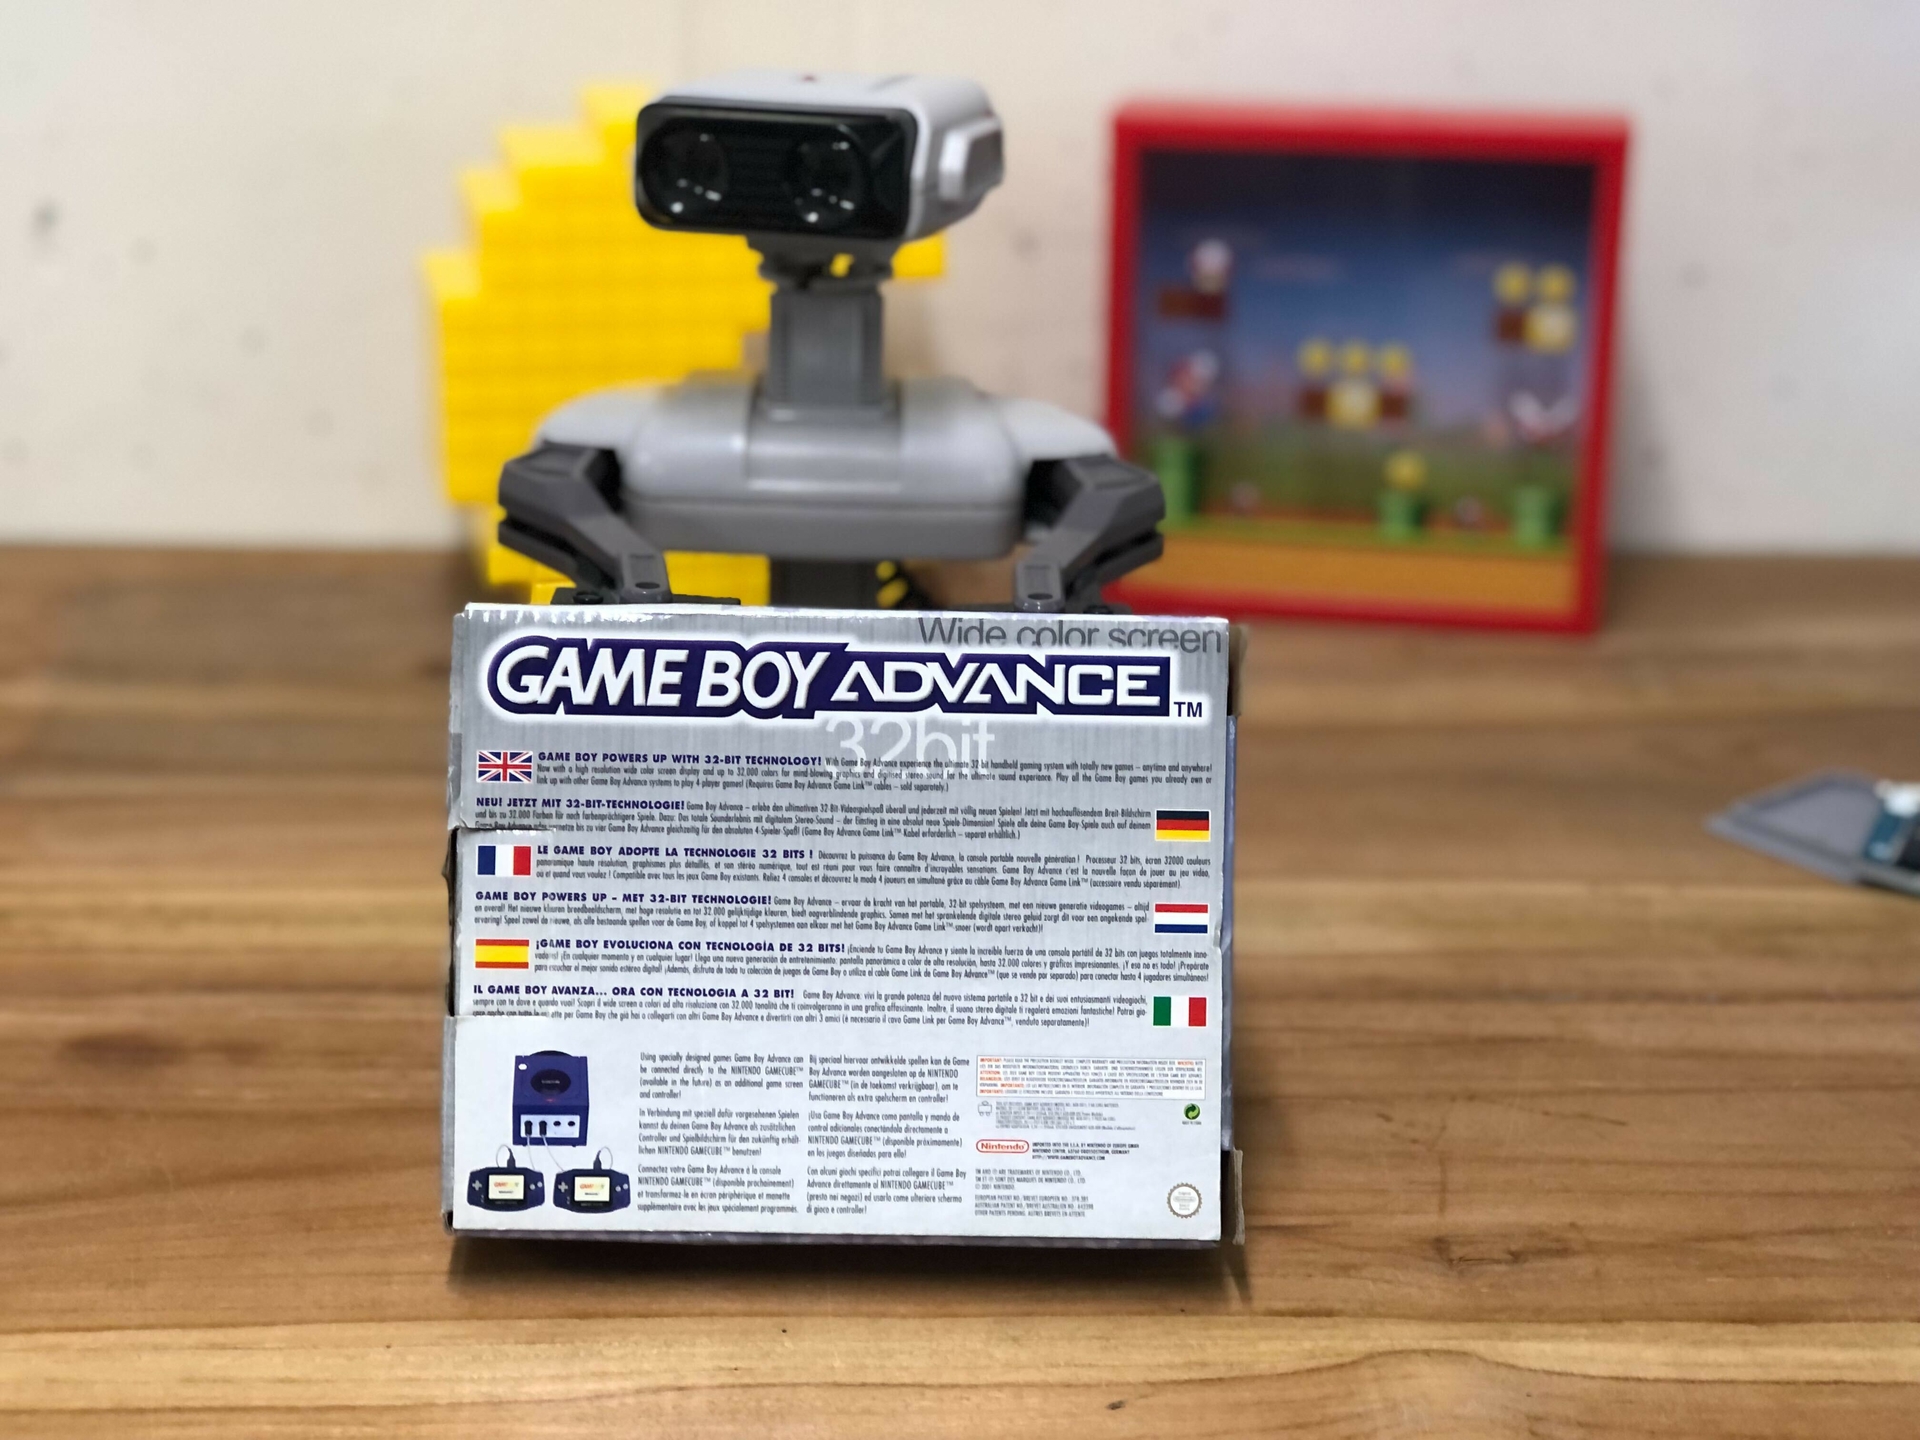 Gameboy Advance Transparent Blue [Complete] - Gameboy Advance Hardware - 3